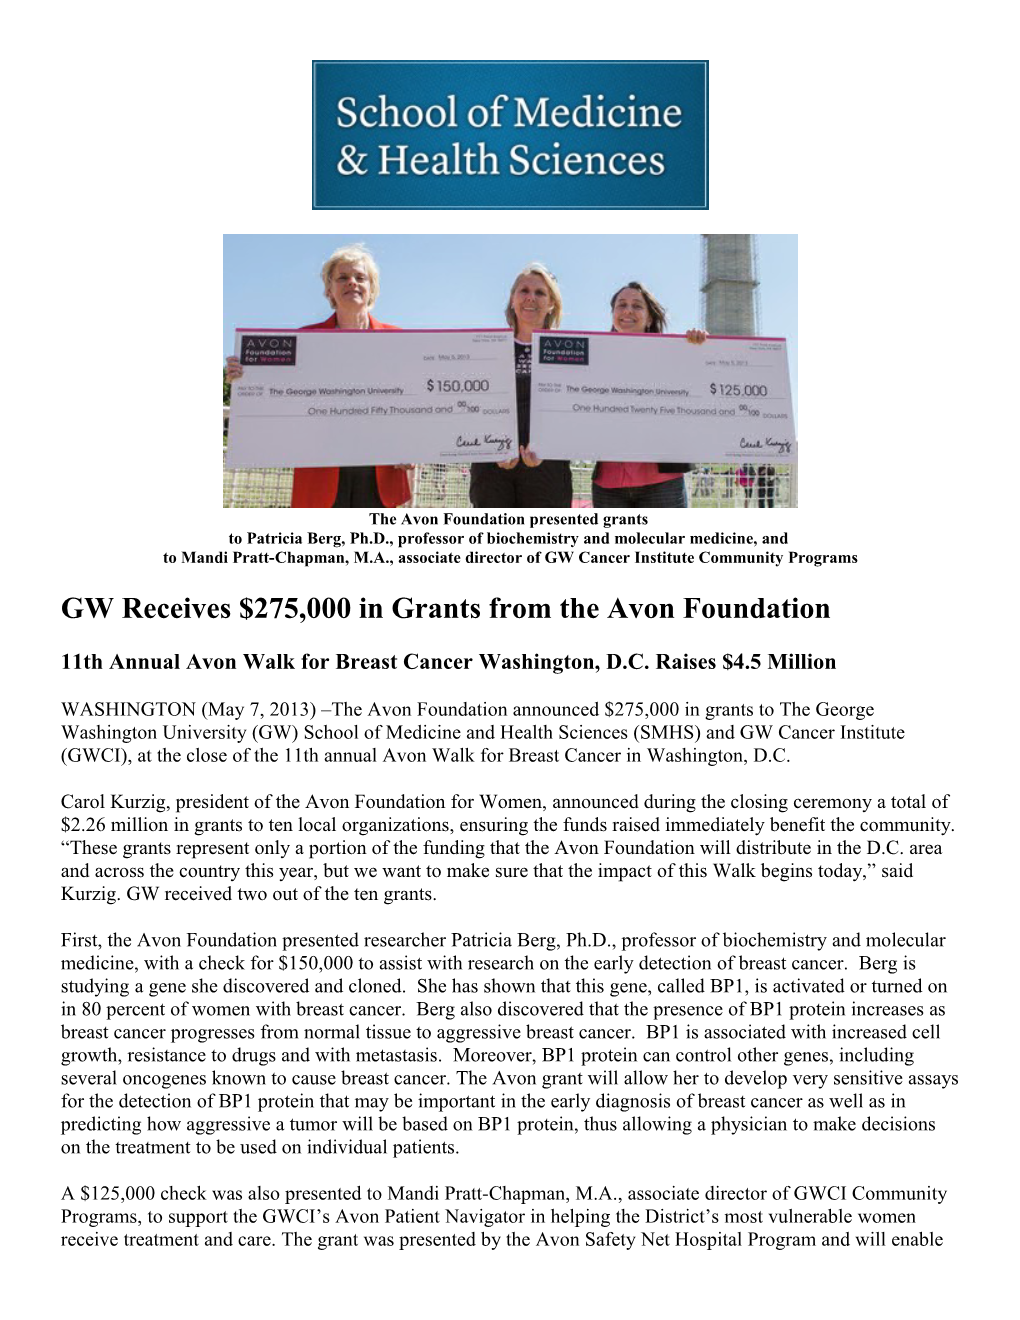 The Avon Foundation Presented Grants